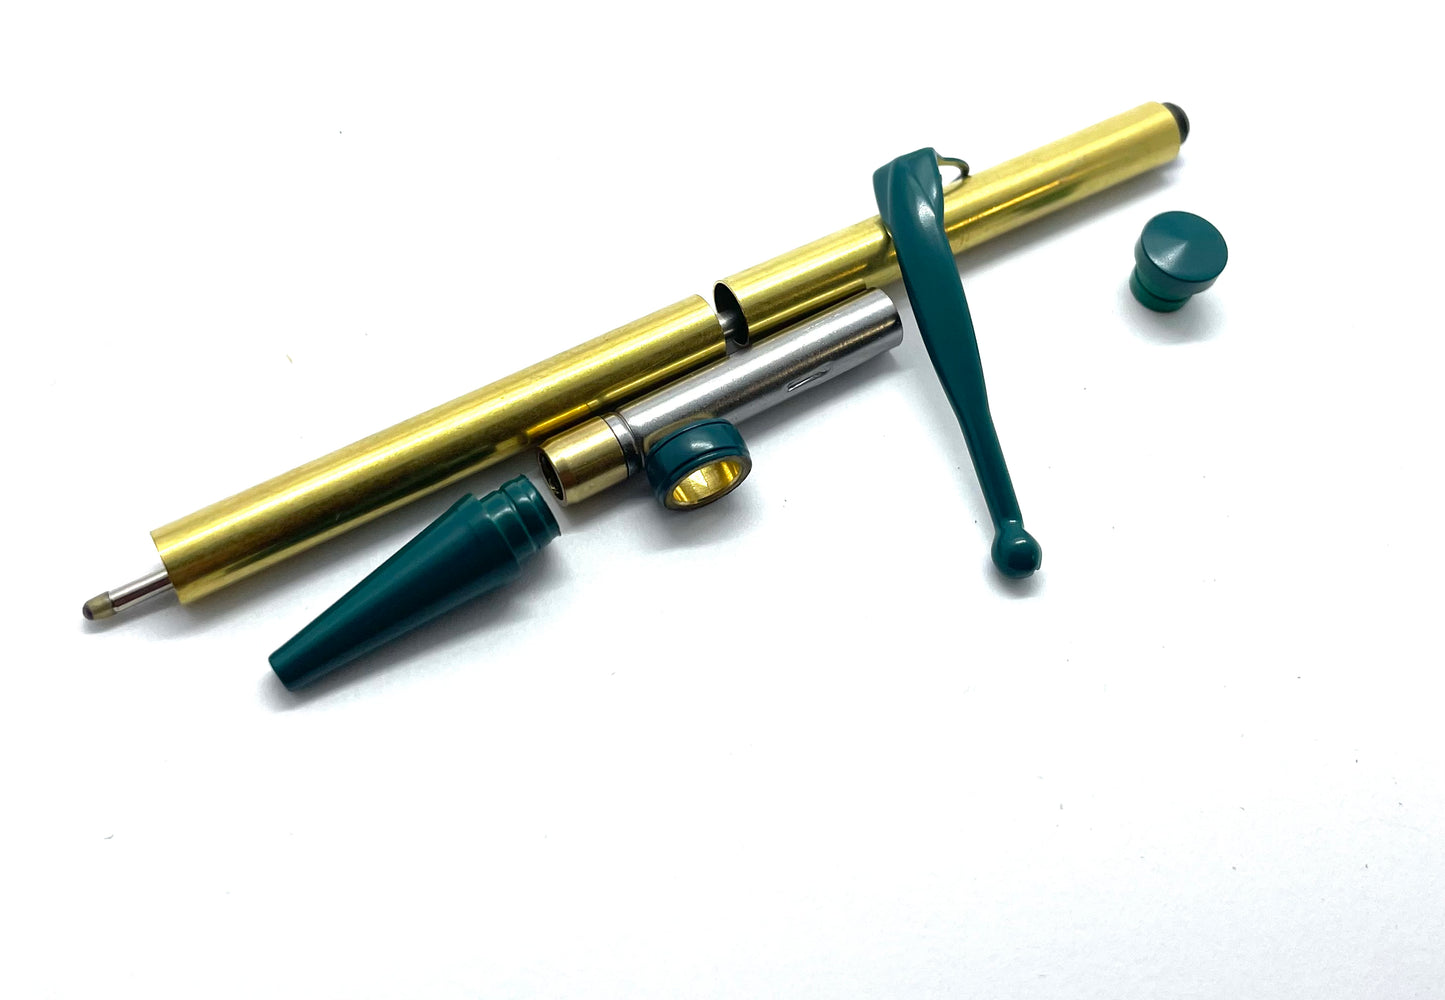 Slimline pen kits